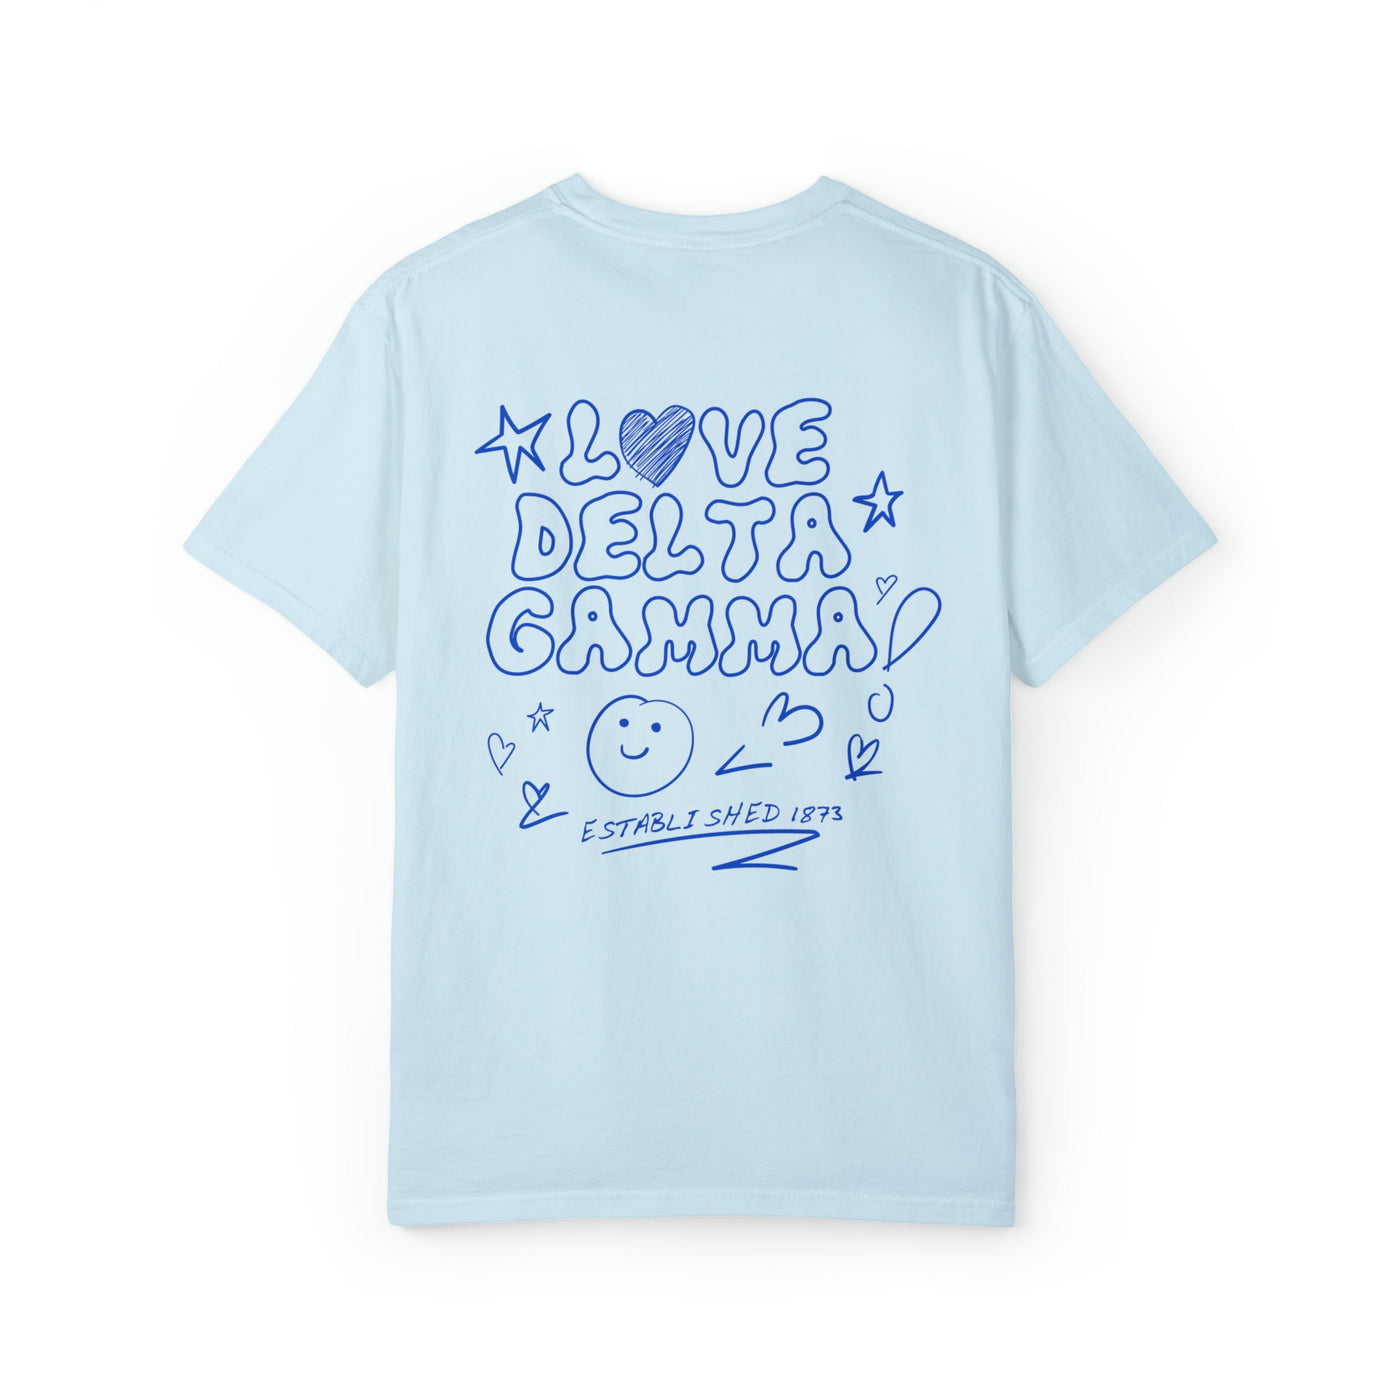 Delta Gamma Love Doodle Sorority T-shirt